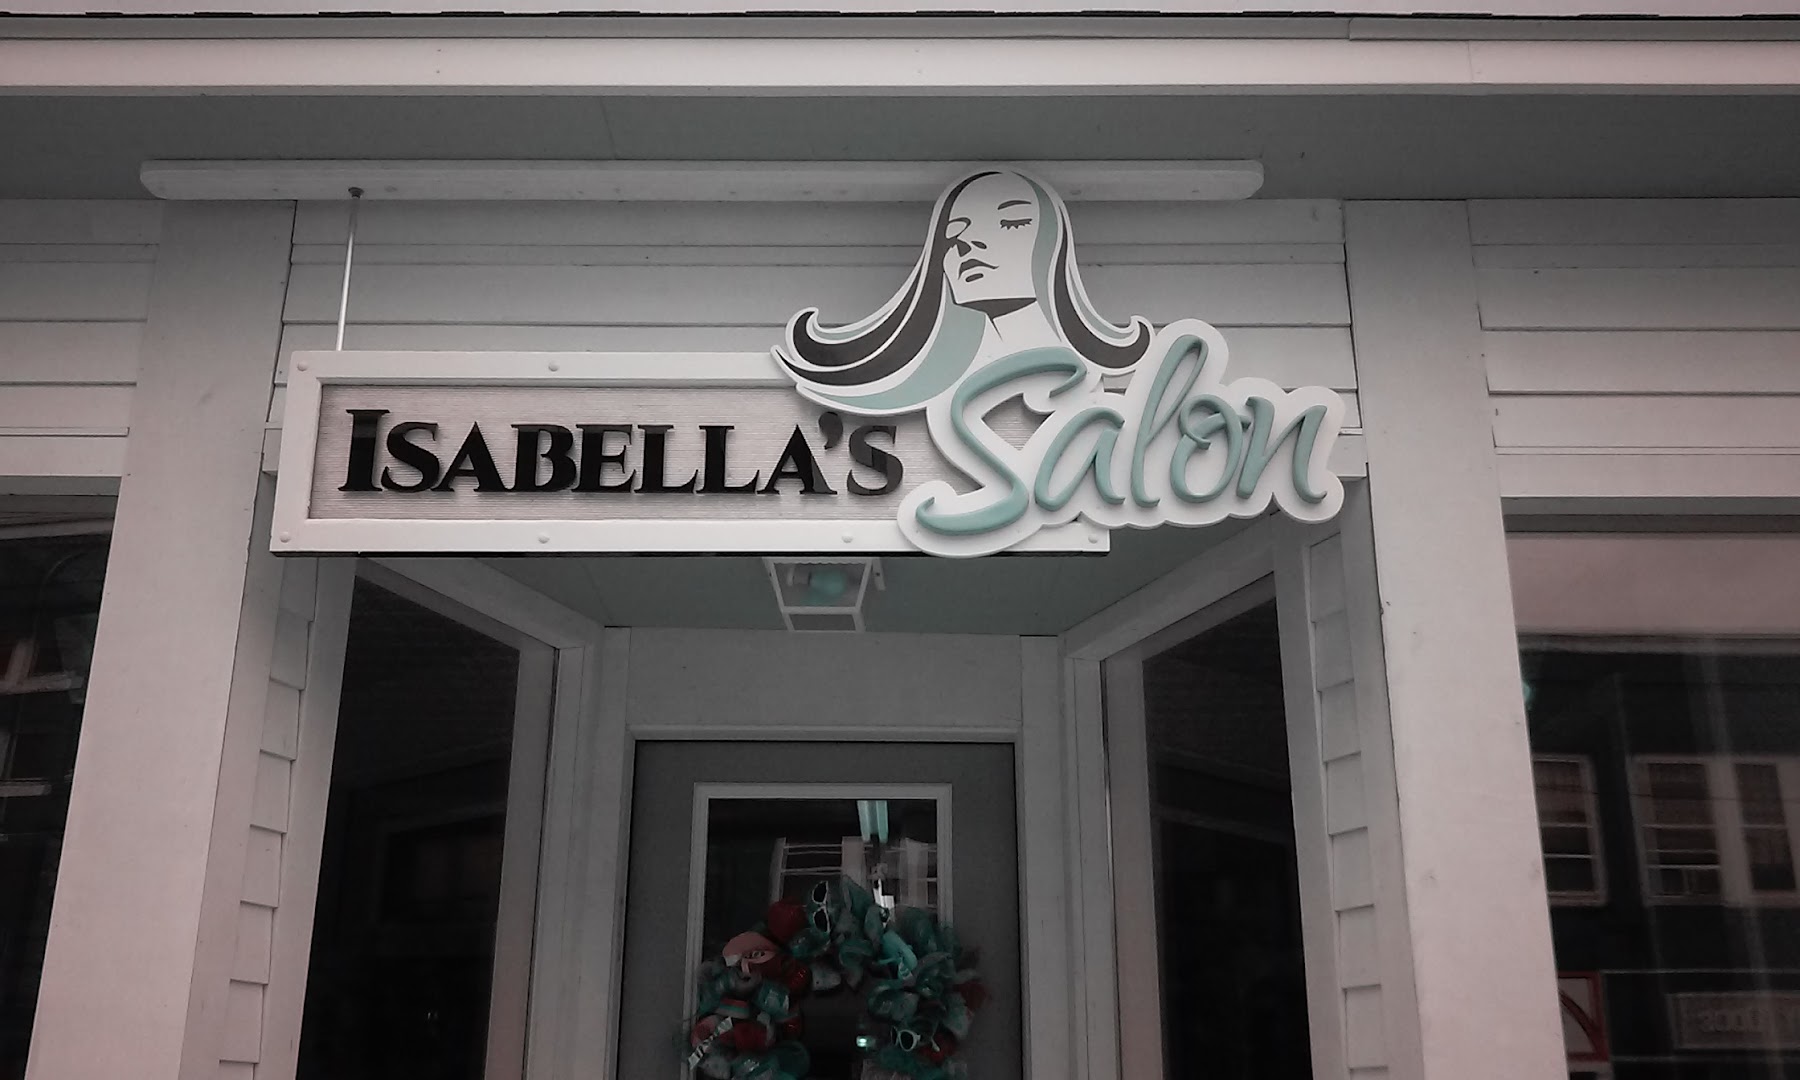 Isabella's Salon